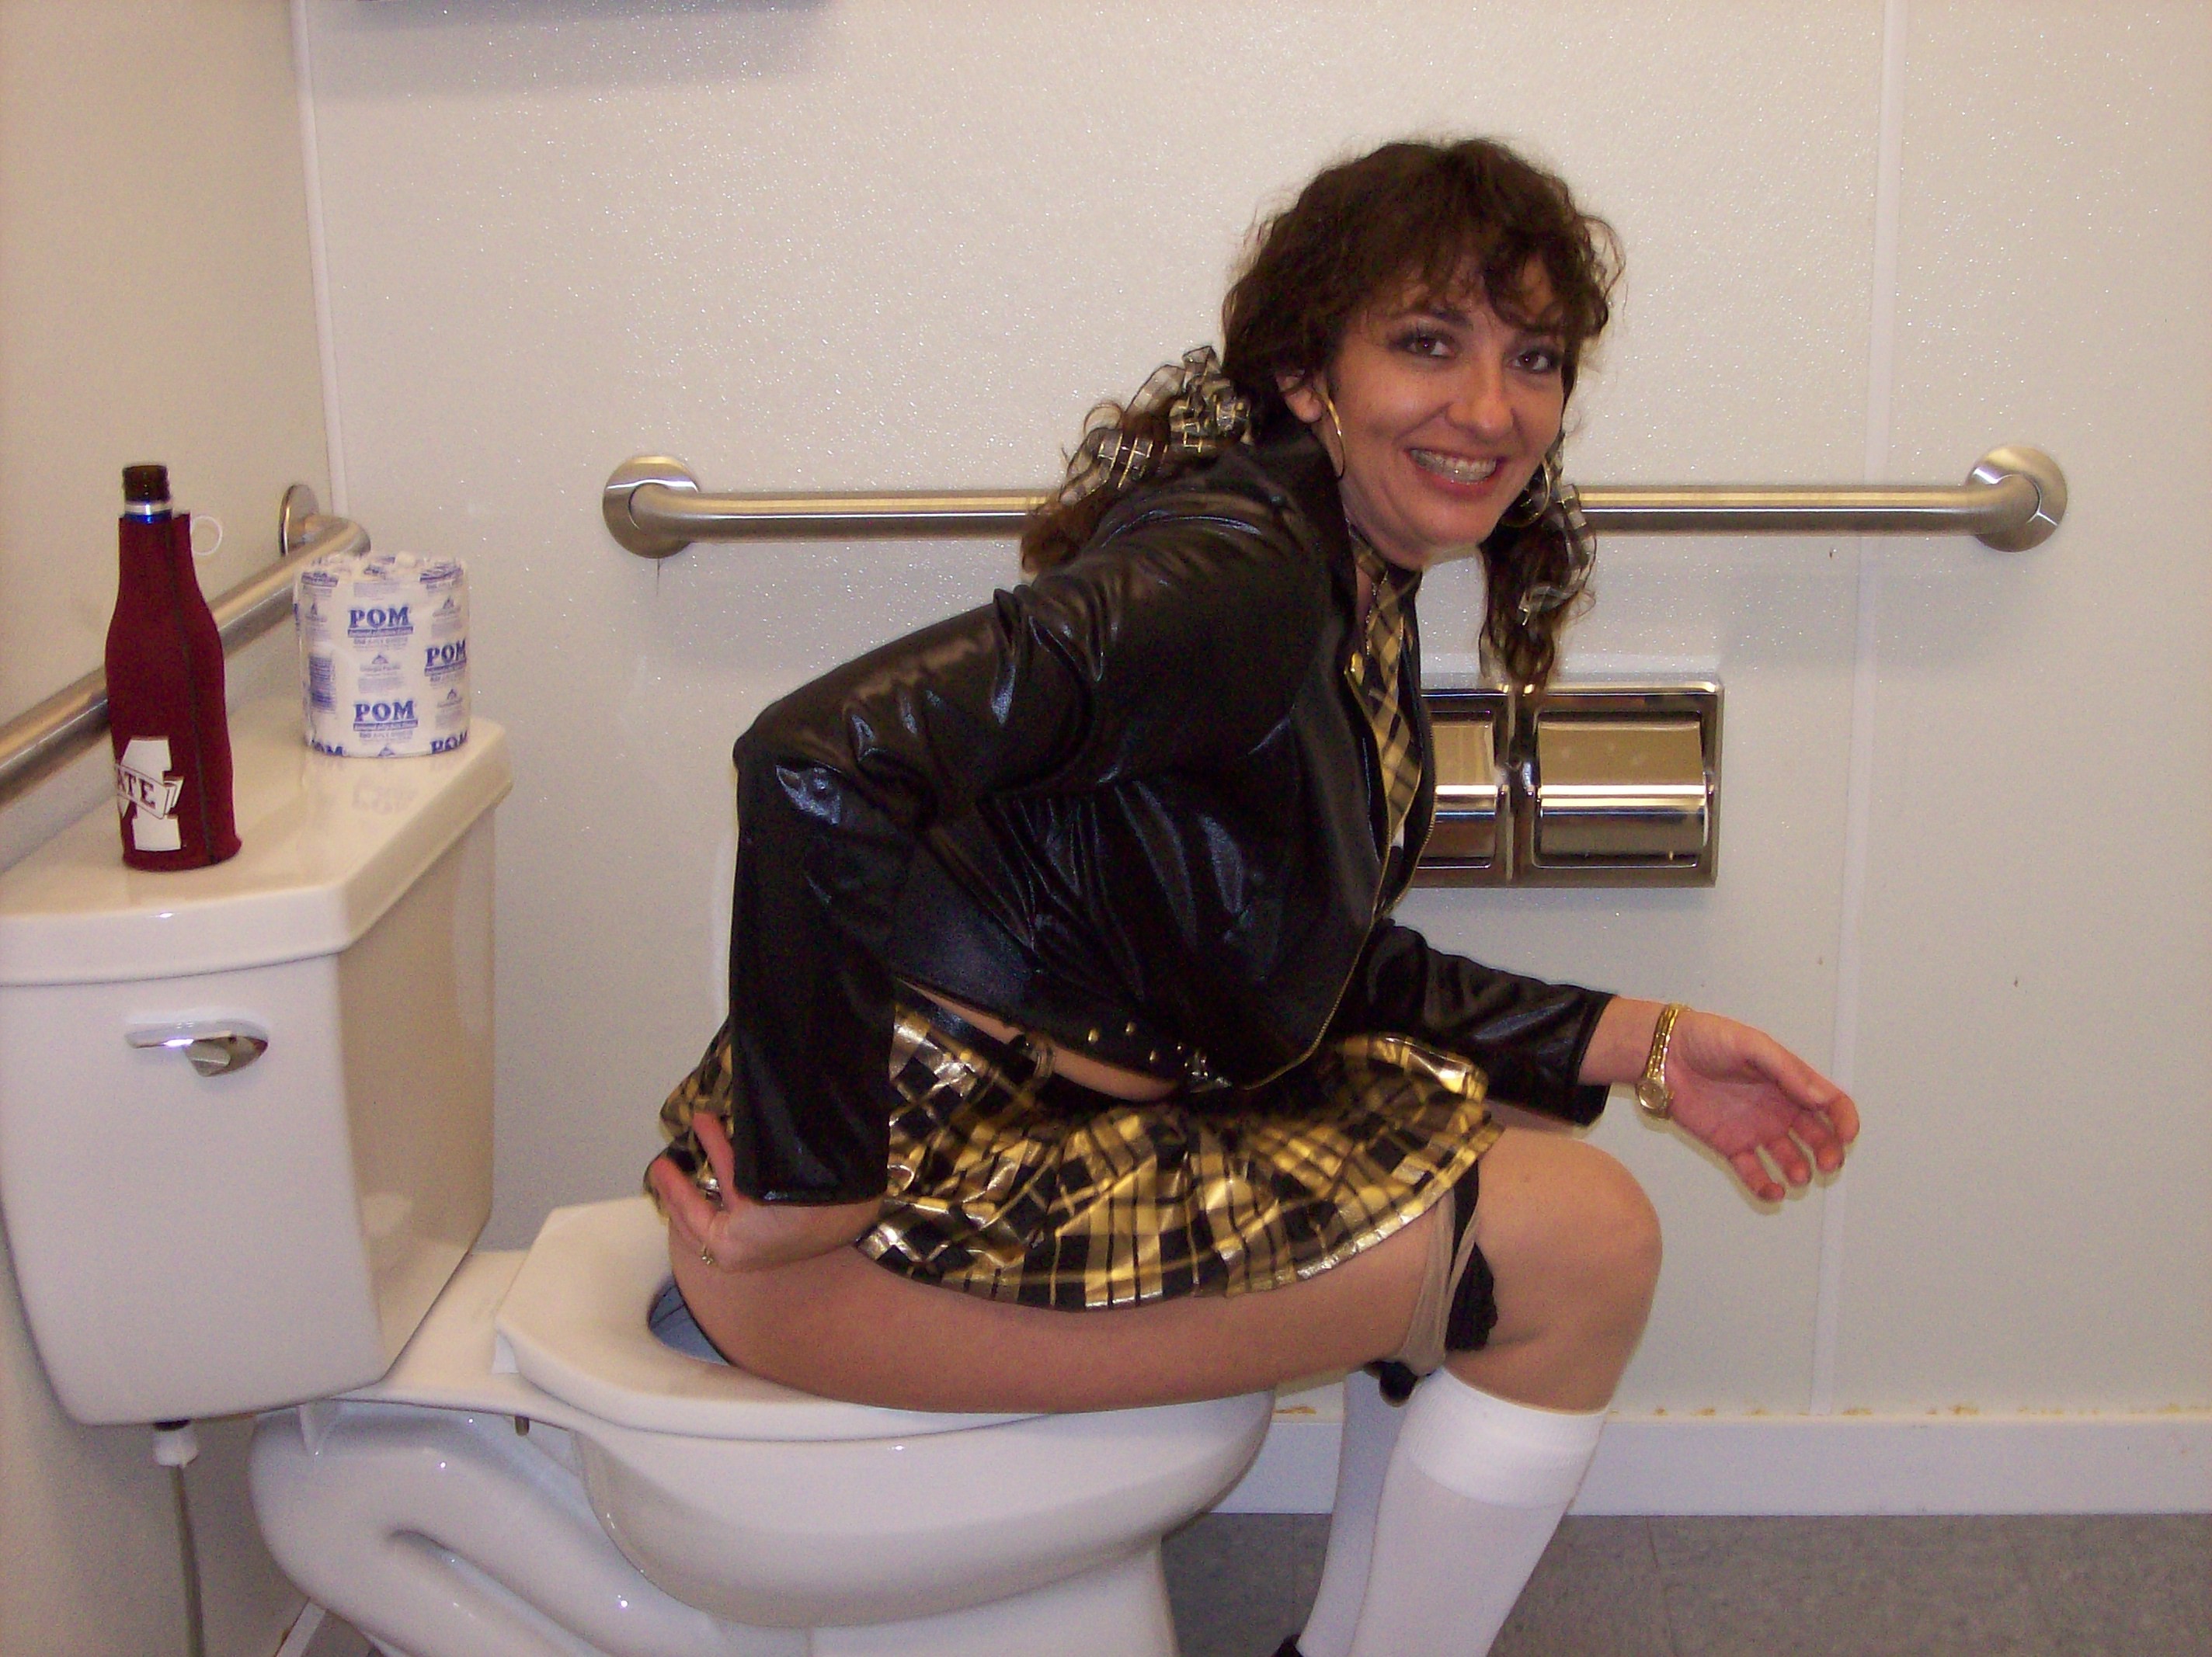 Sitting on toilet peeing